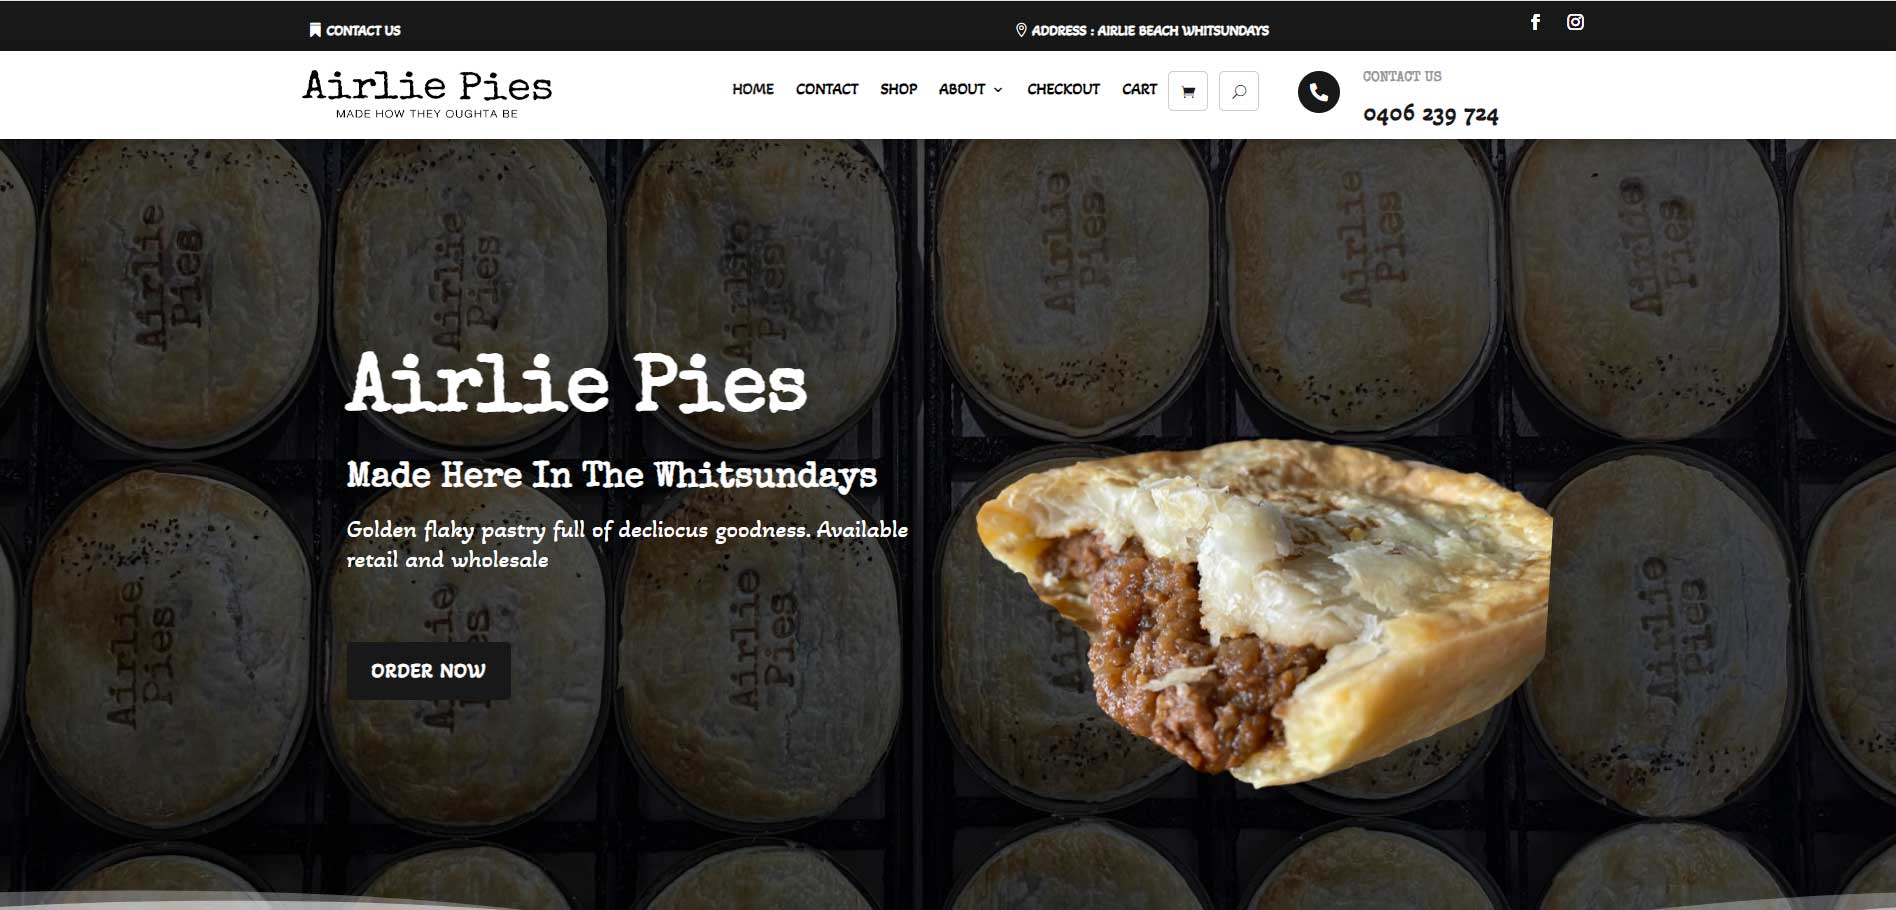 Airlie Pies website screenshot 